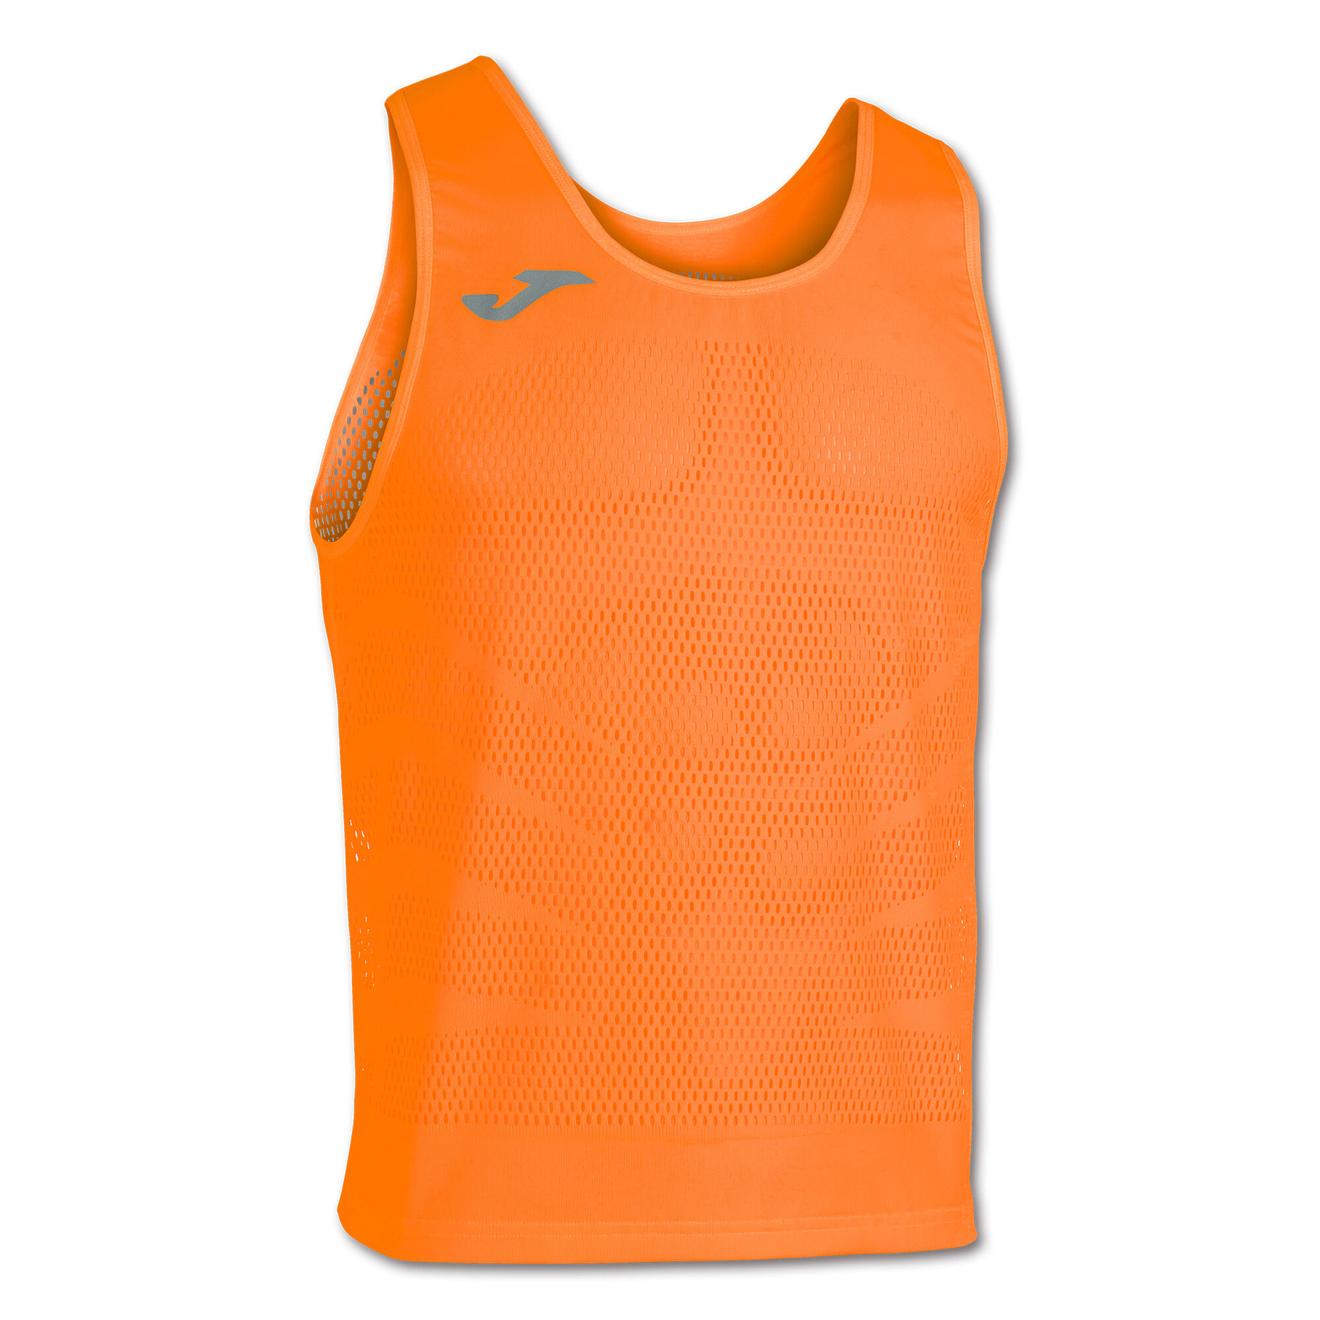 Oferta de Camiseta tirantes hombre Marathon naranja flúor por $8,78 en Joma